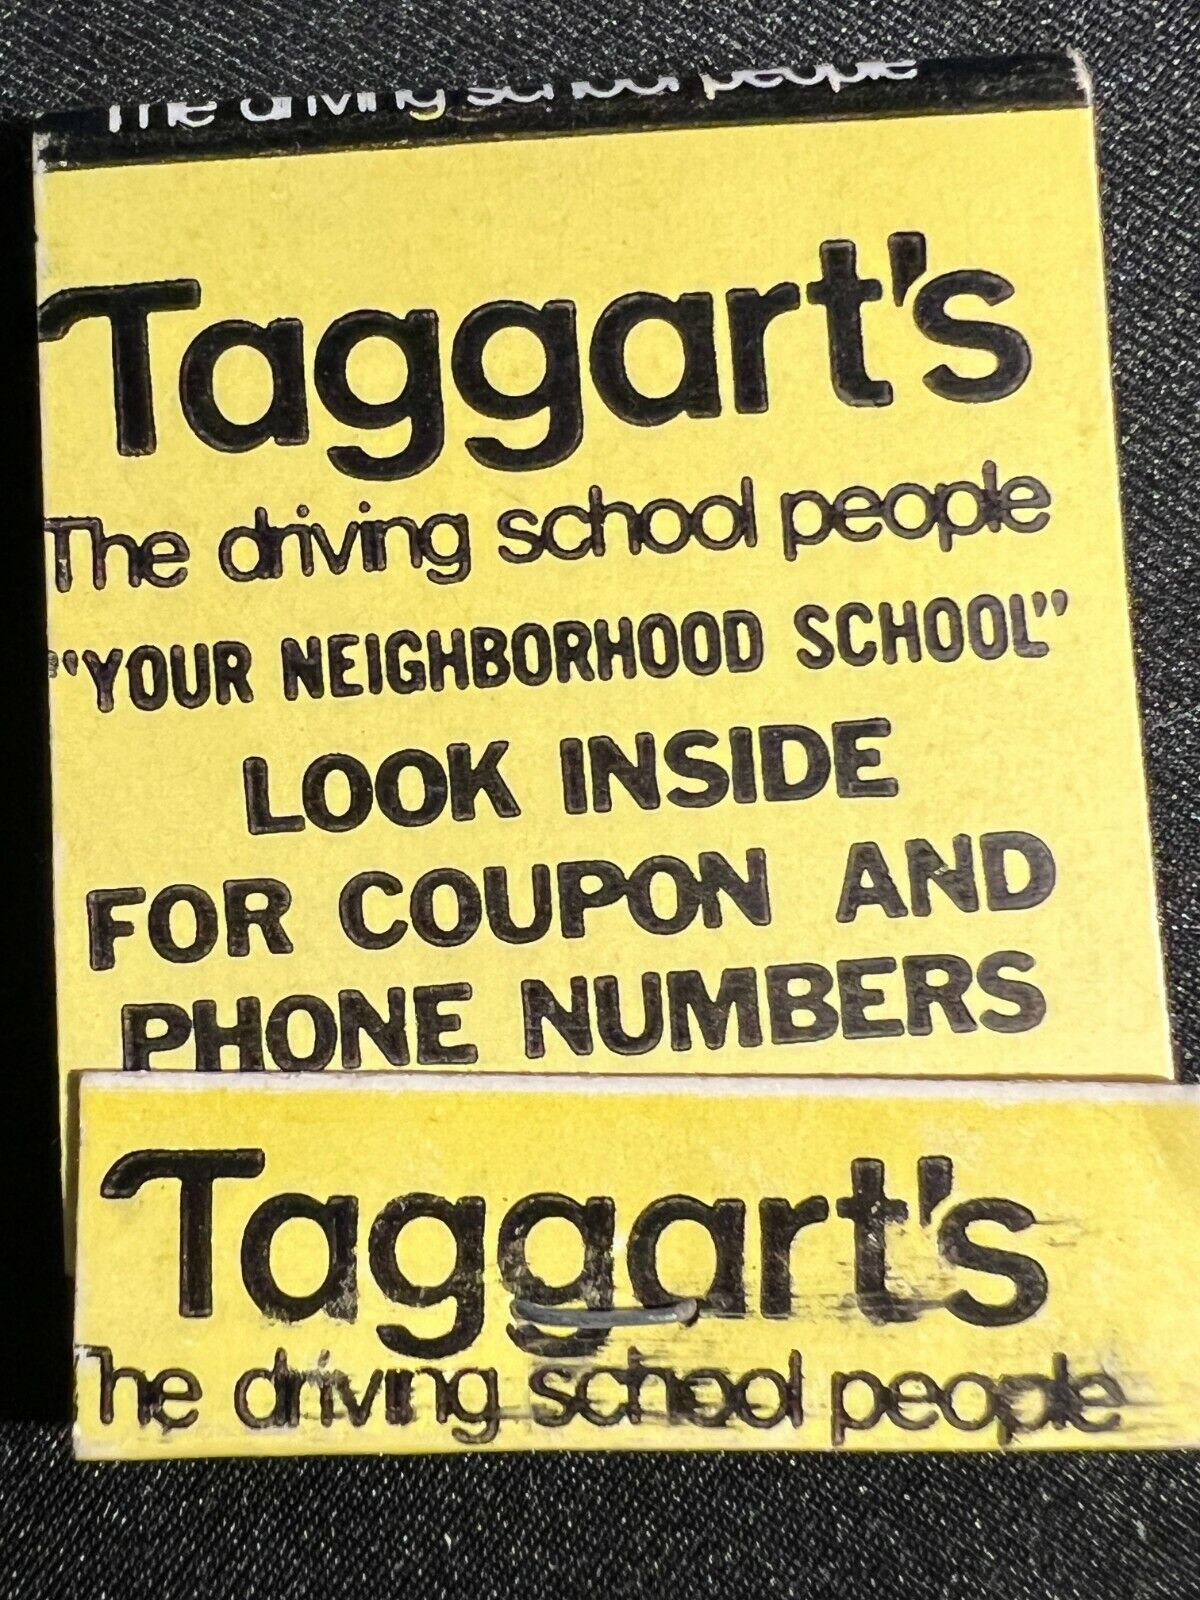 VINTAGE MATCHBOOK - TAGGART\'S DRIVING SCHOOL PEOPLE - UNSTRUCK